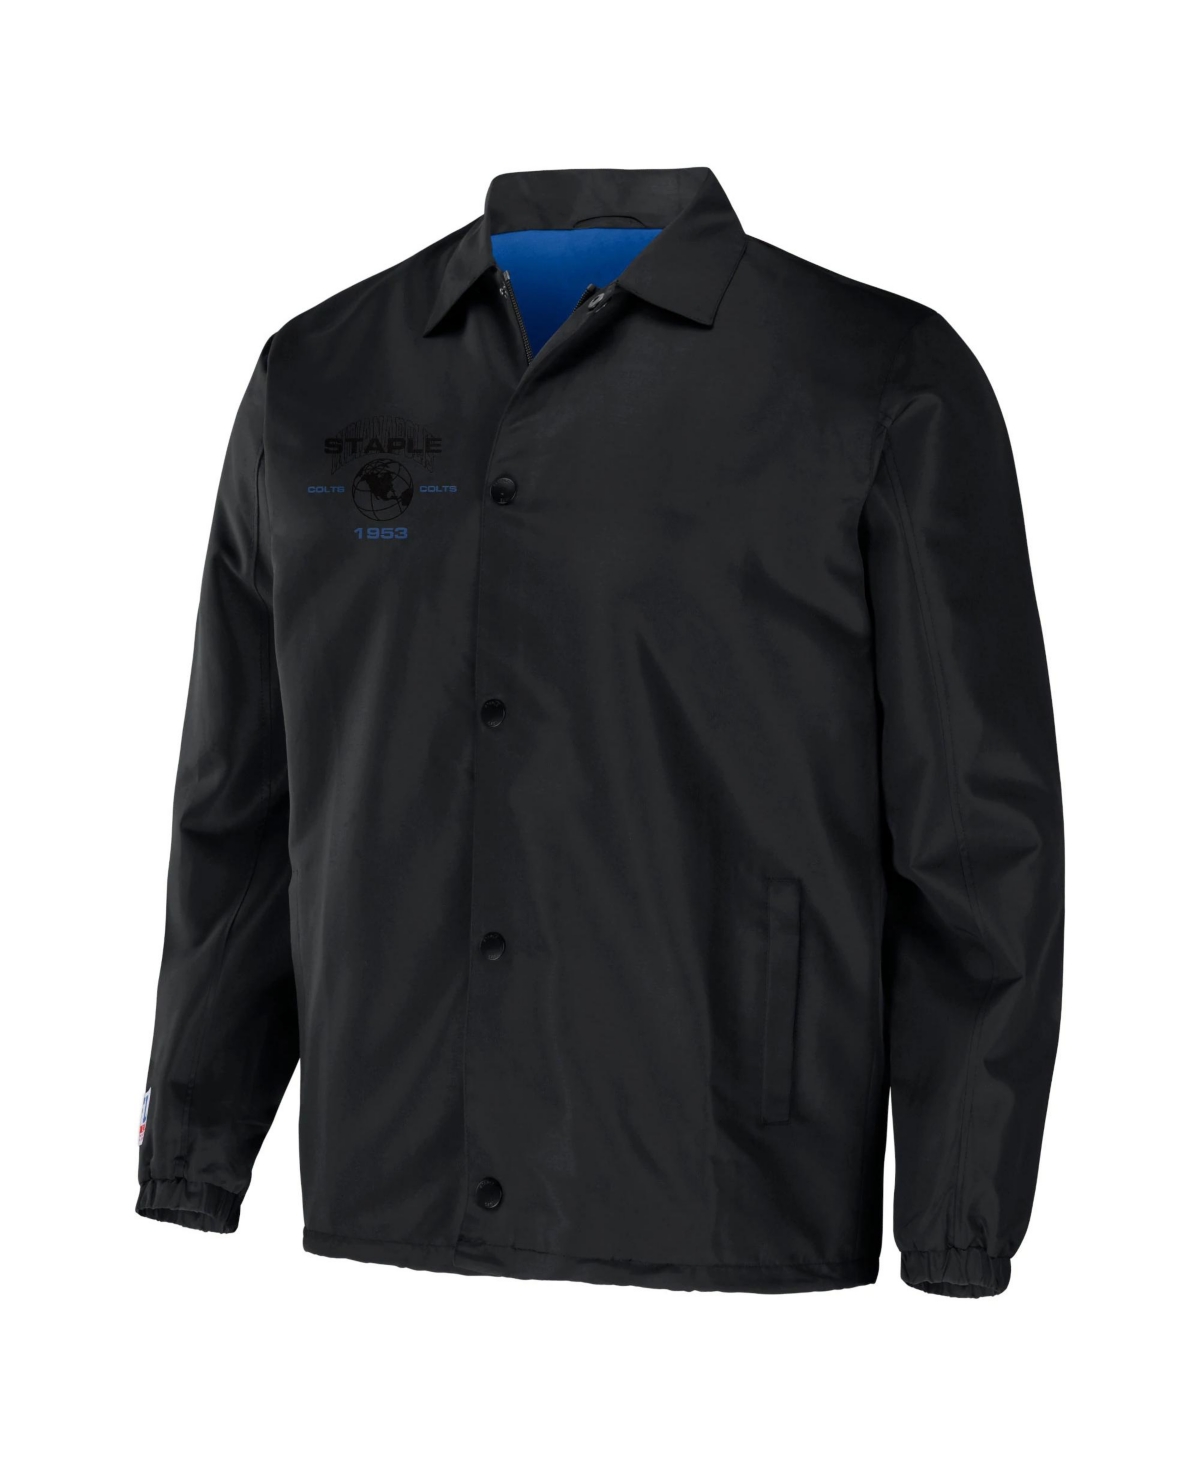 Shop Nfl Properties Men's Nfl X Staple Black Indianapolis Colts Embroidered Nylon Jacket